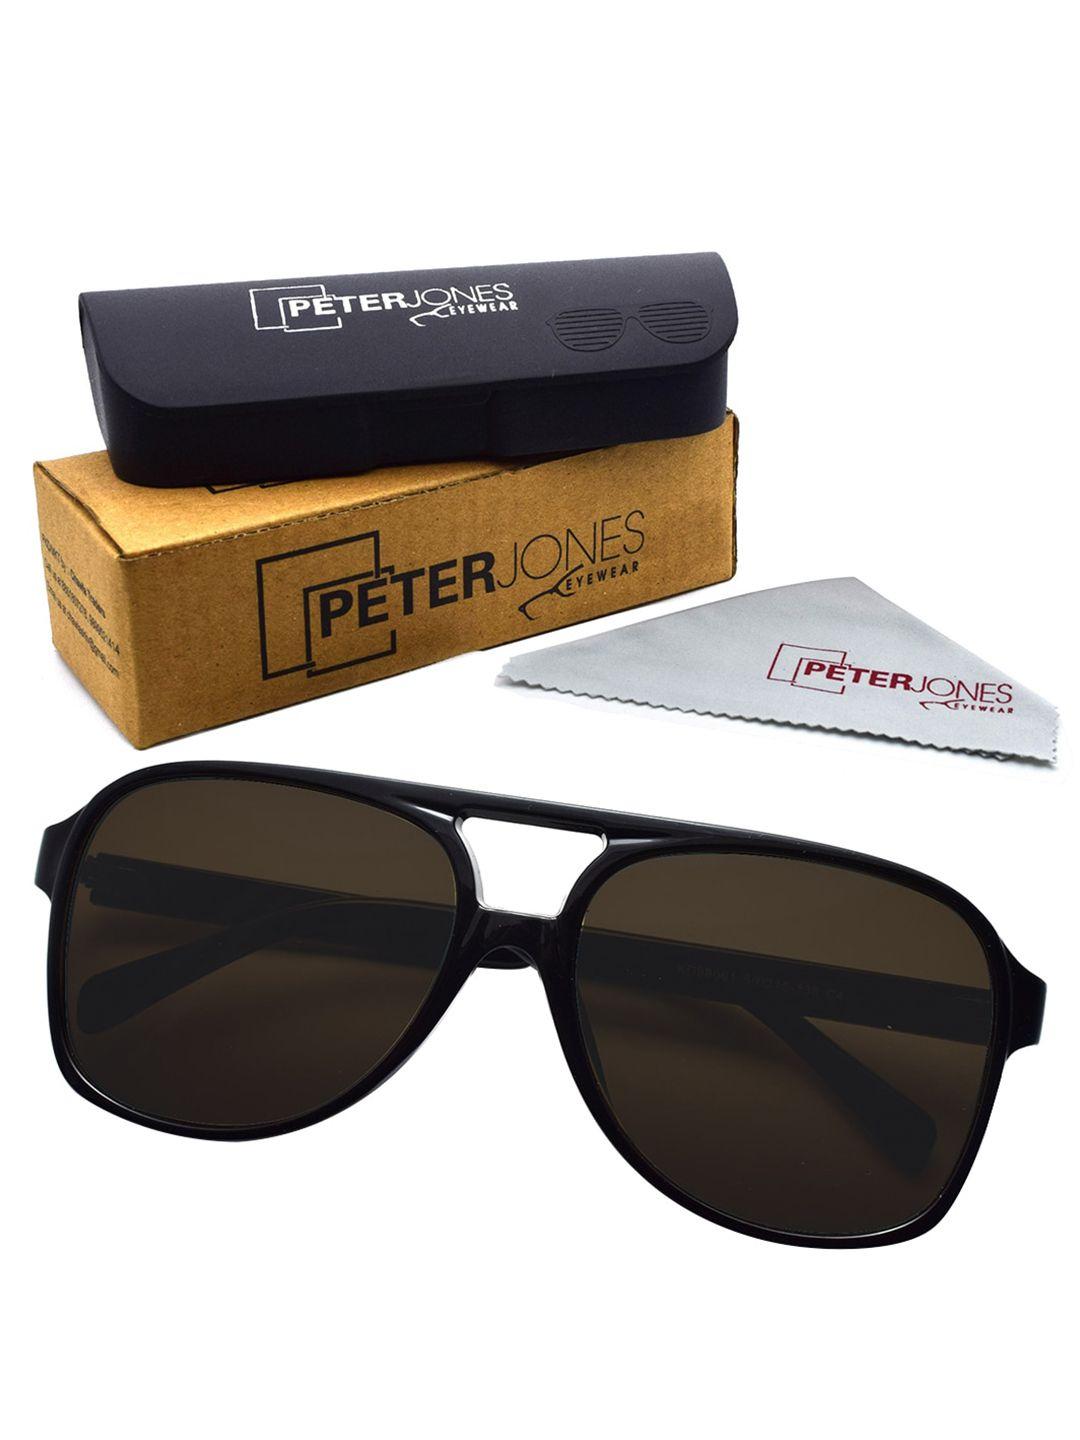 peter jones eyewear unisex aviator sunglasses with uv protected lens 98061b